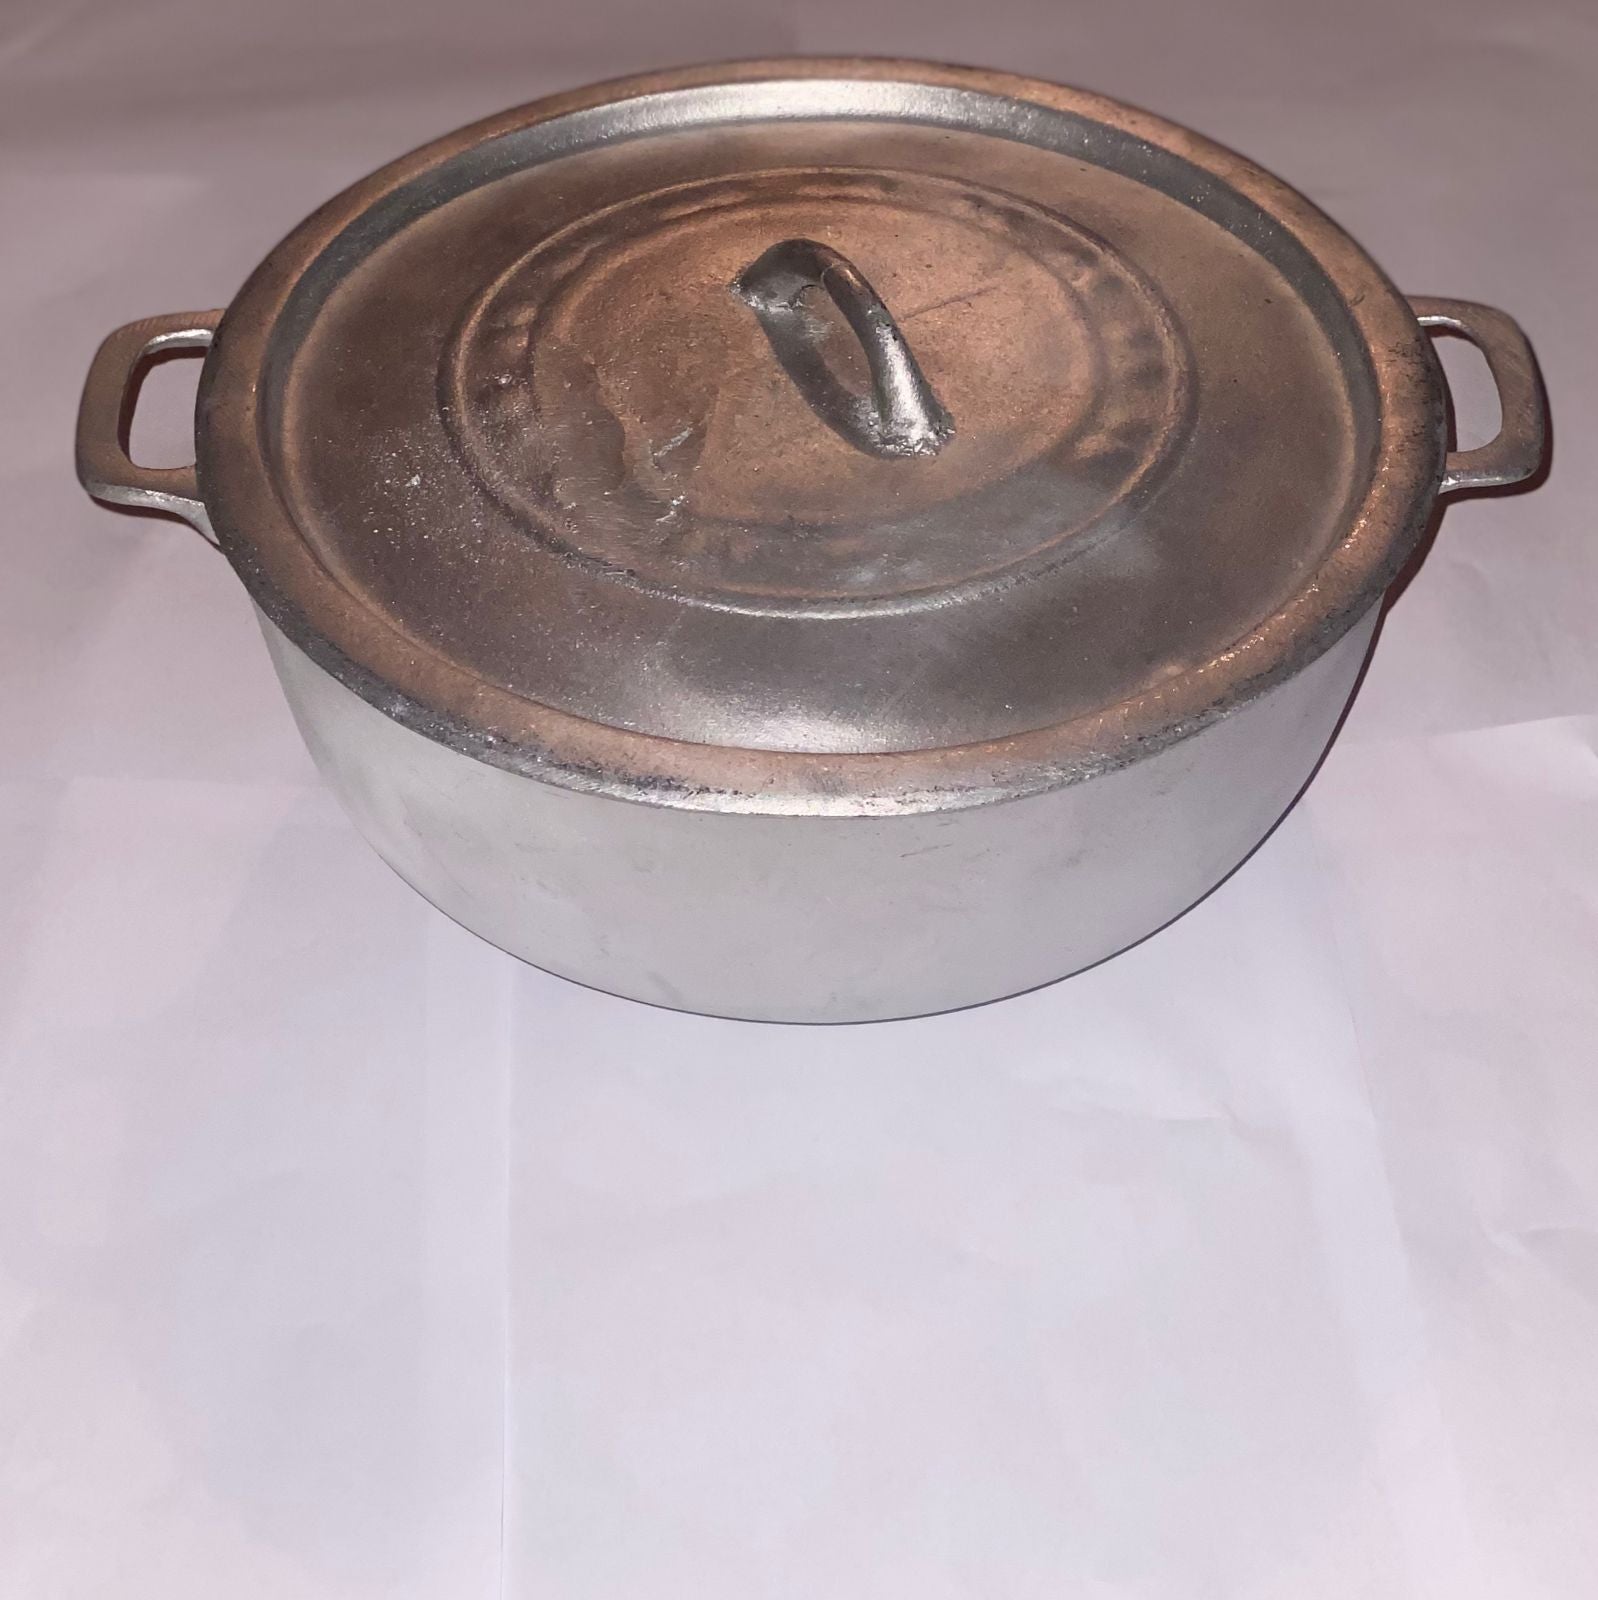 Jamaican Dutch Pot Cast Iron Dutch Pot Dutchie or Dutchy Made in